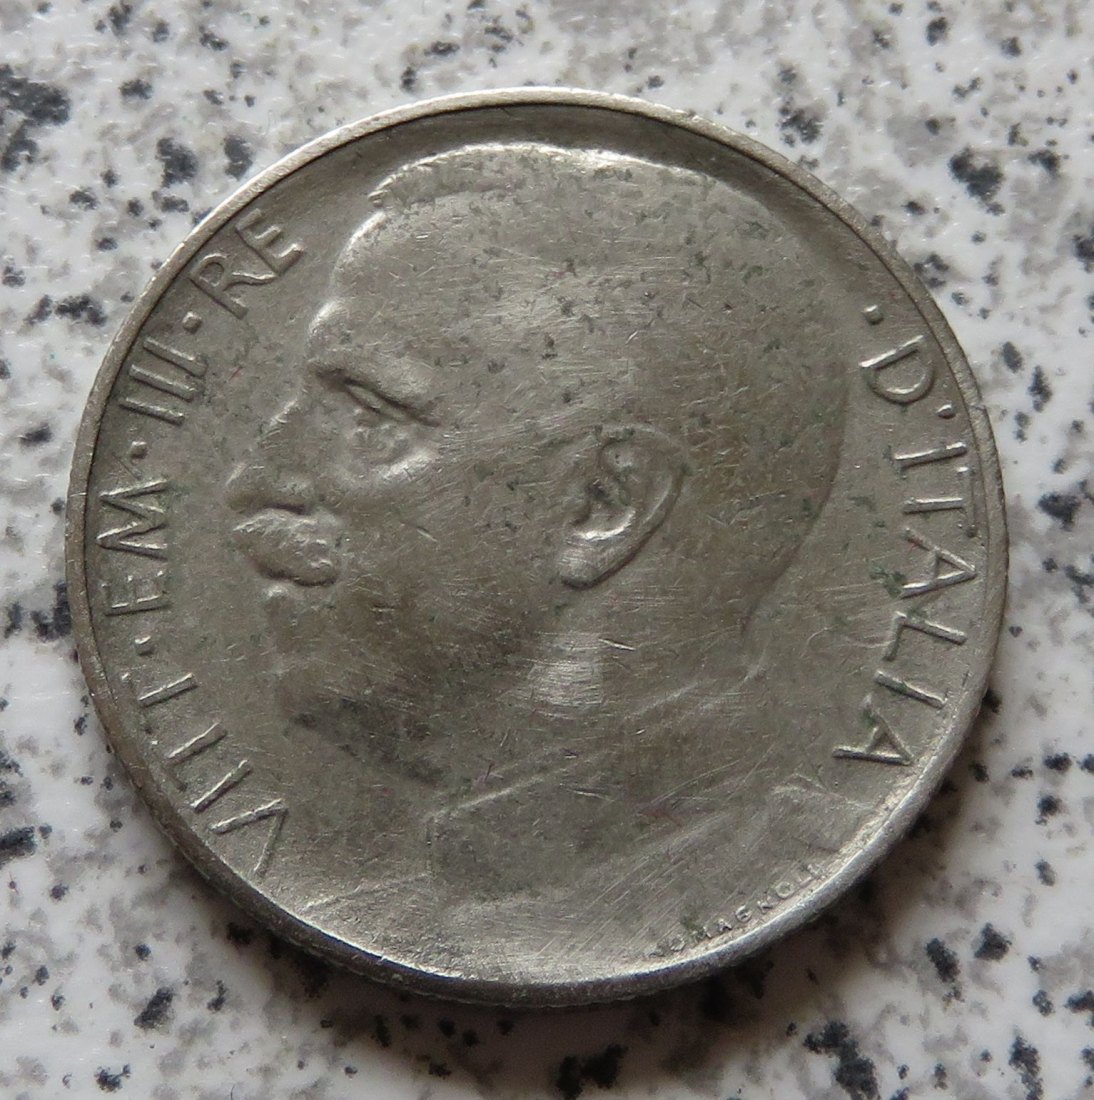  Italien 50 Centesimi 1921, Riffelrand   